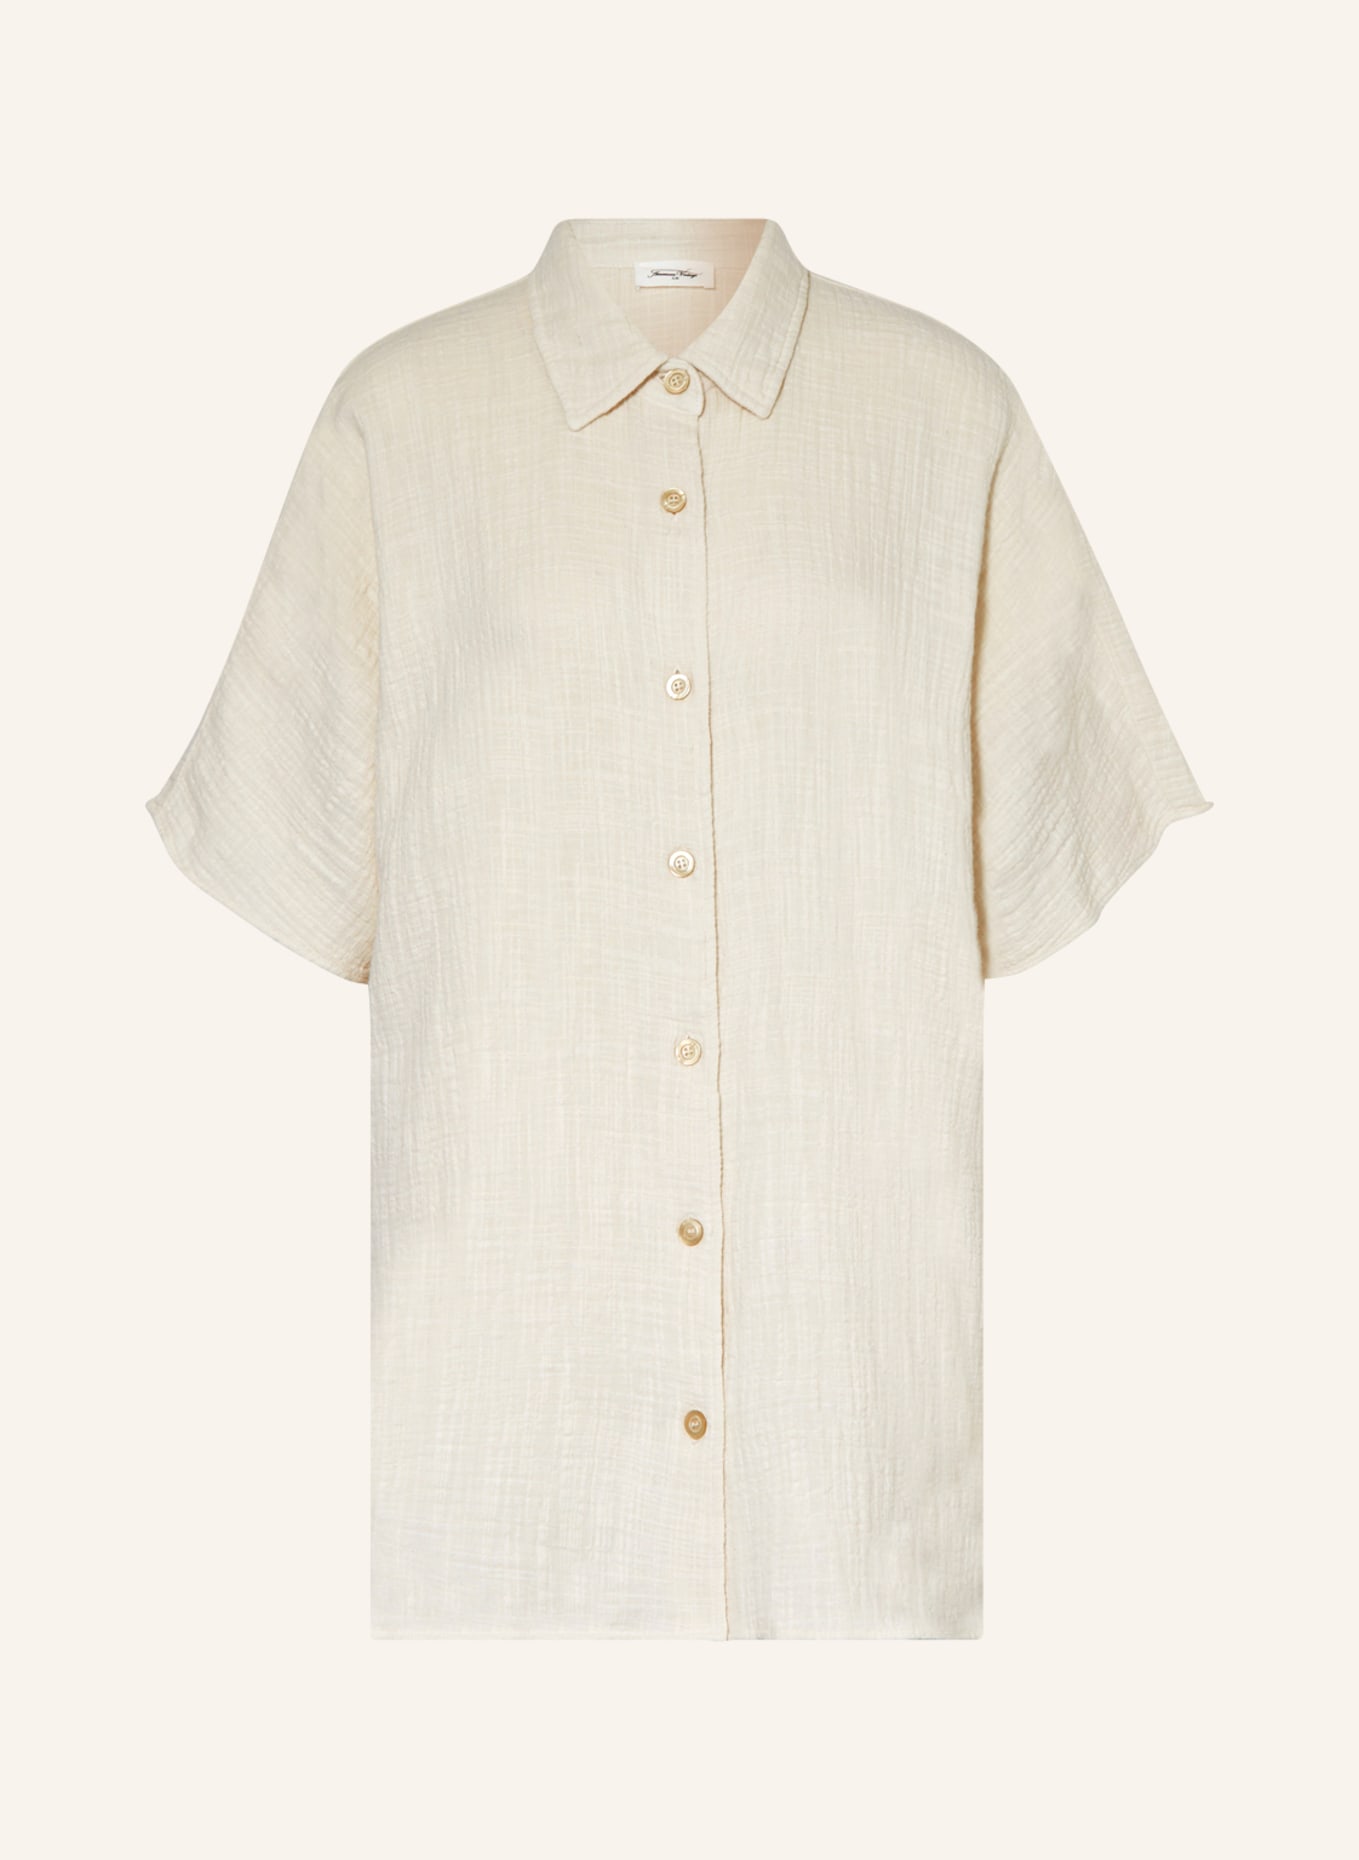 American Vintage Shirt dress OYOBAY made of muslin